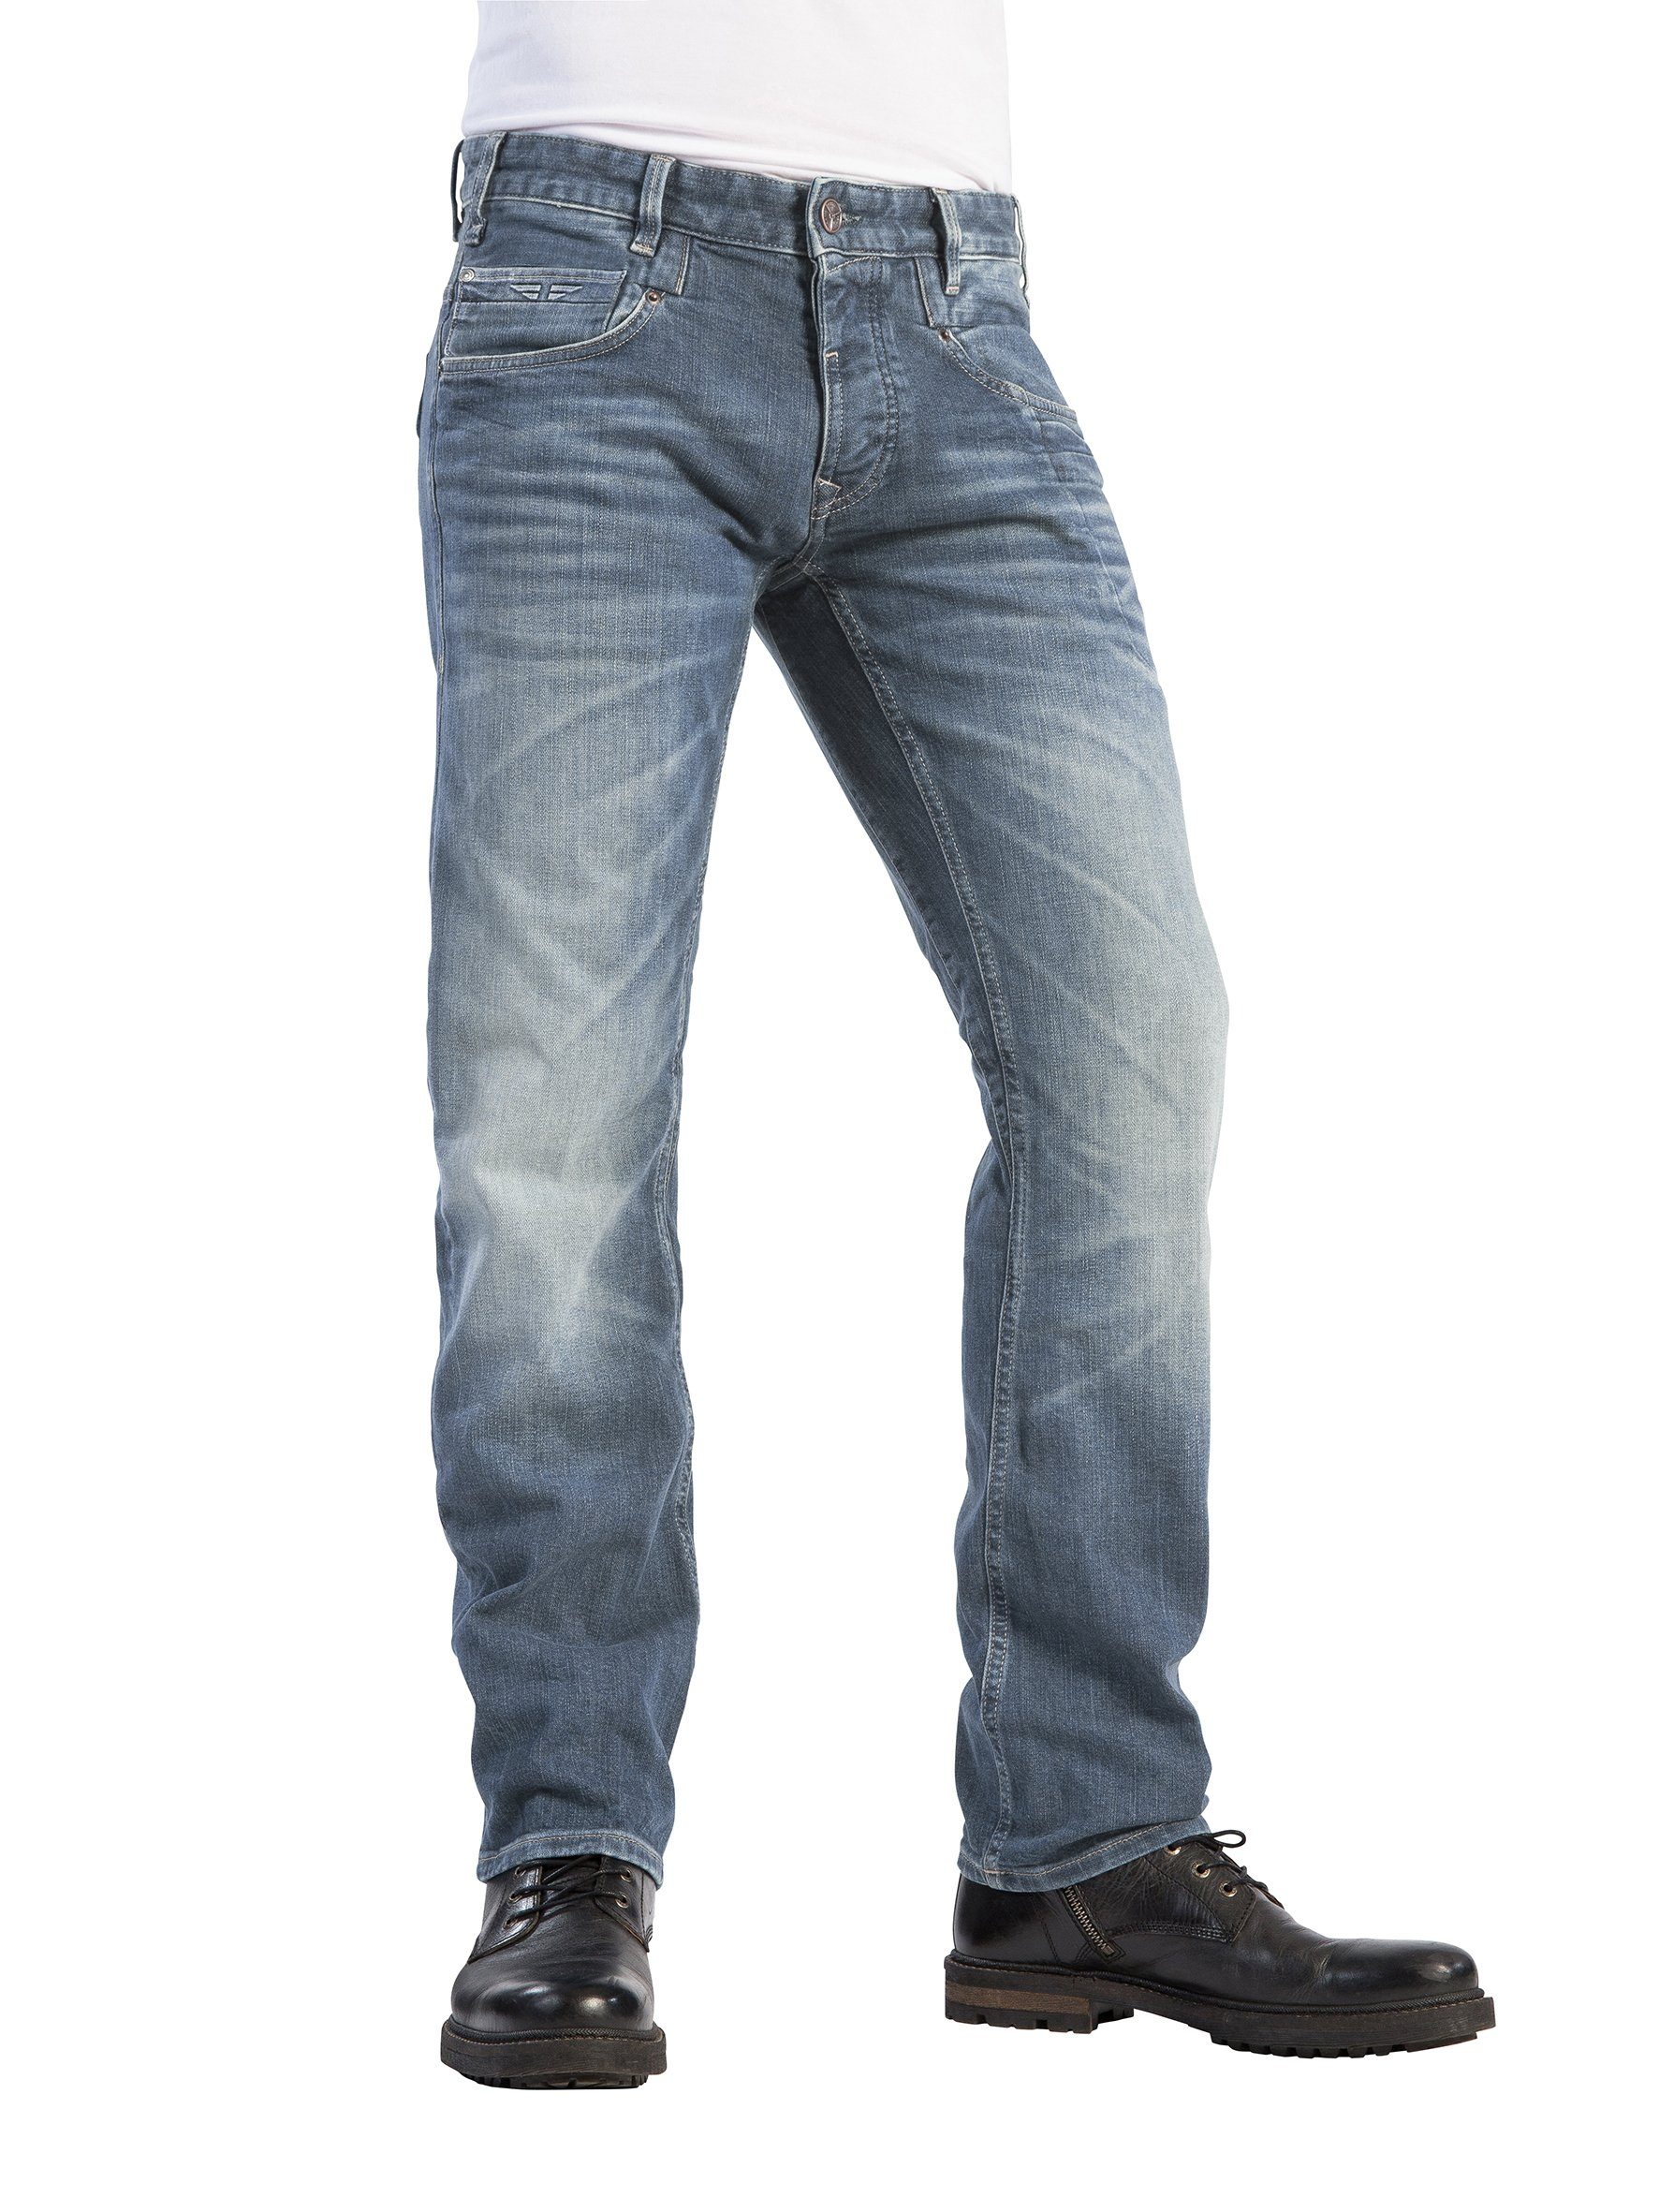 Medoox Relaxed John bluegrey Fit Denim 5-Pocket-Jeans Baxter by HERO